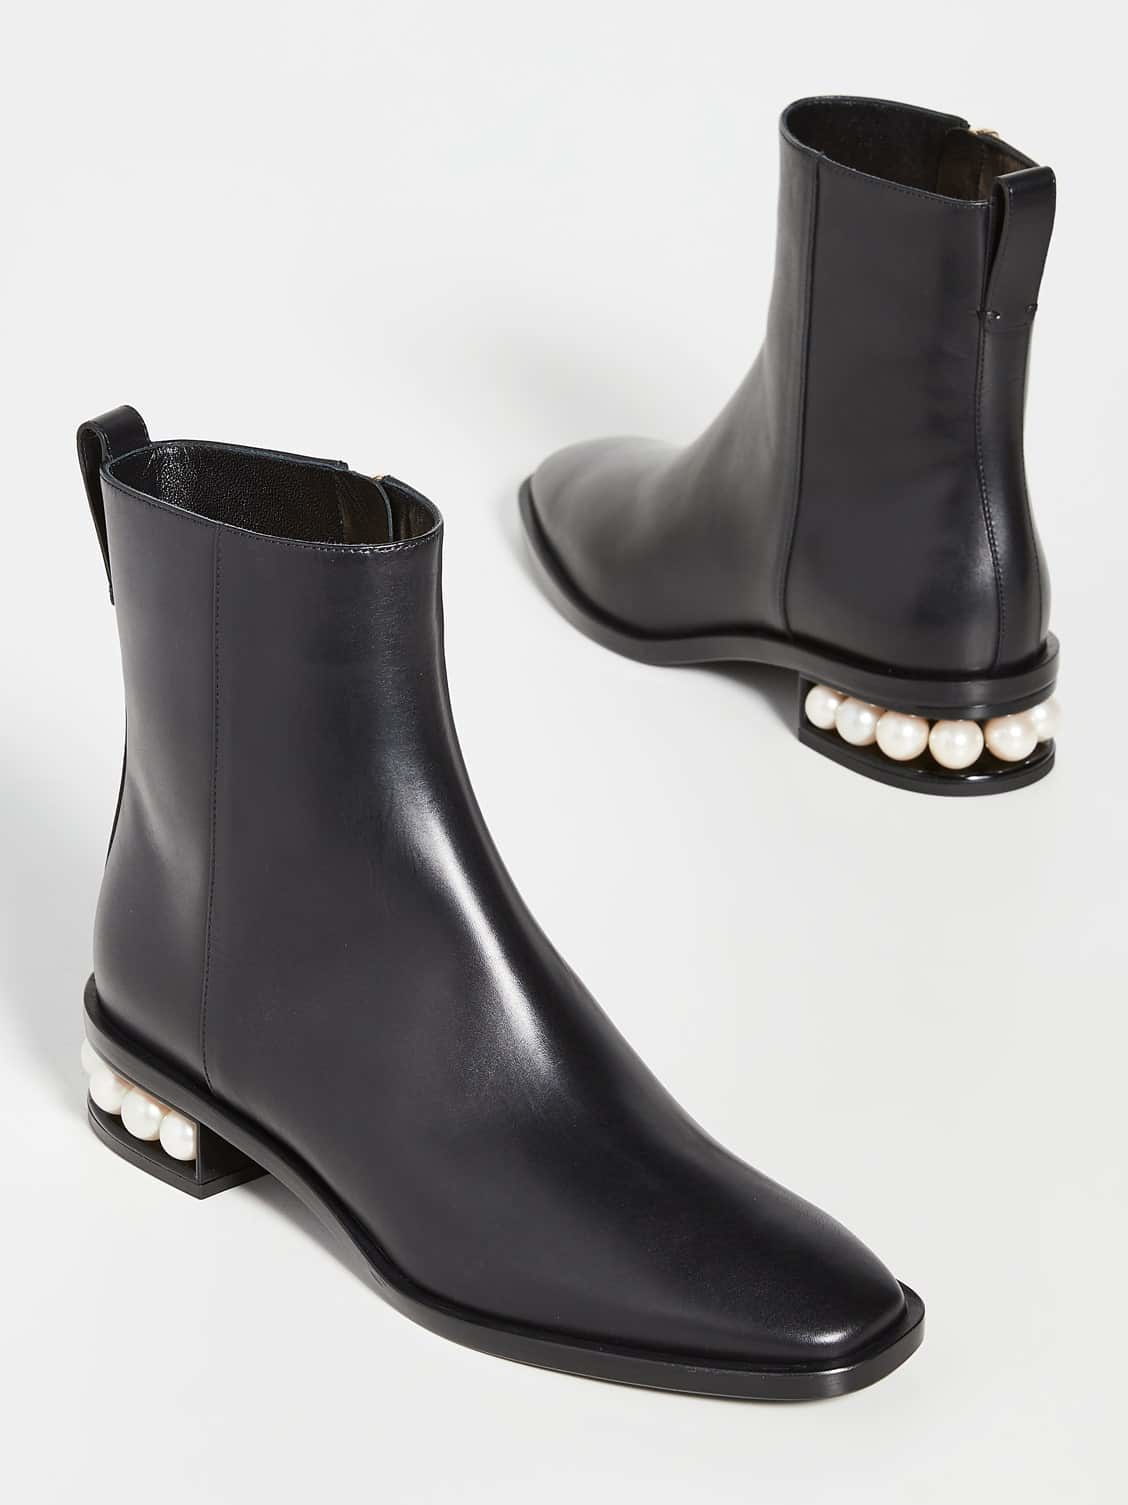 Casati Cute Black Leather Ankle Boots Low Heel, by Nicholas Kirkwood